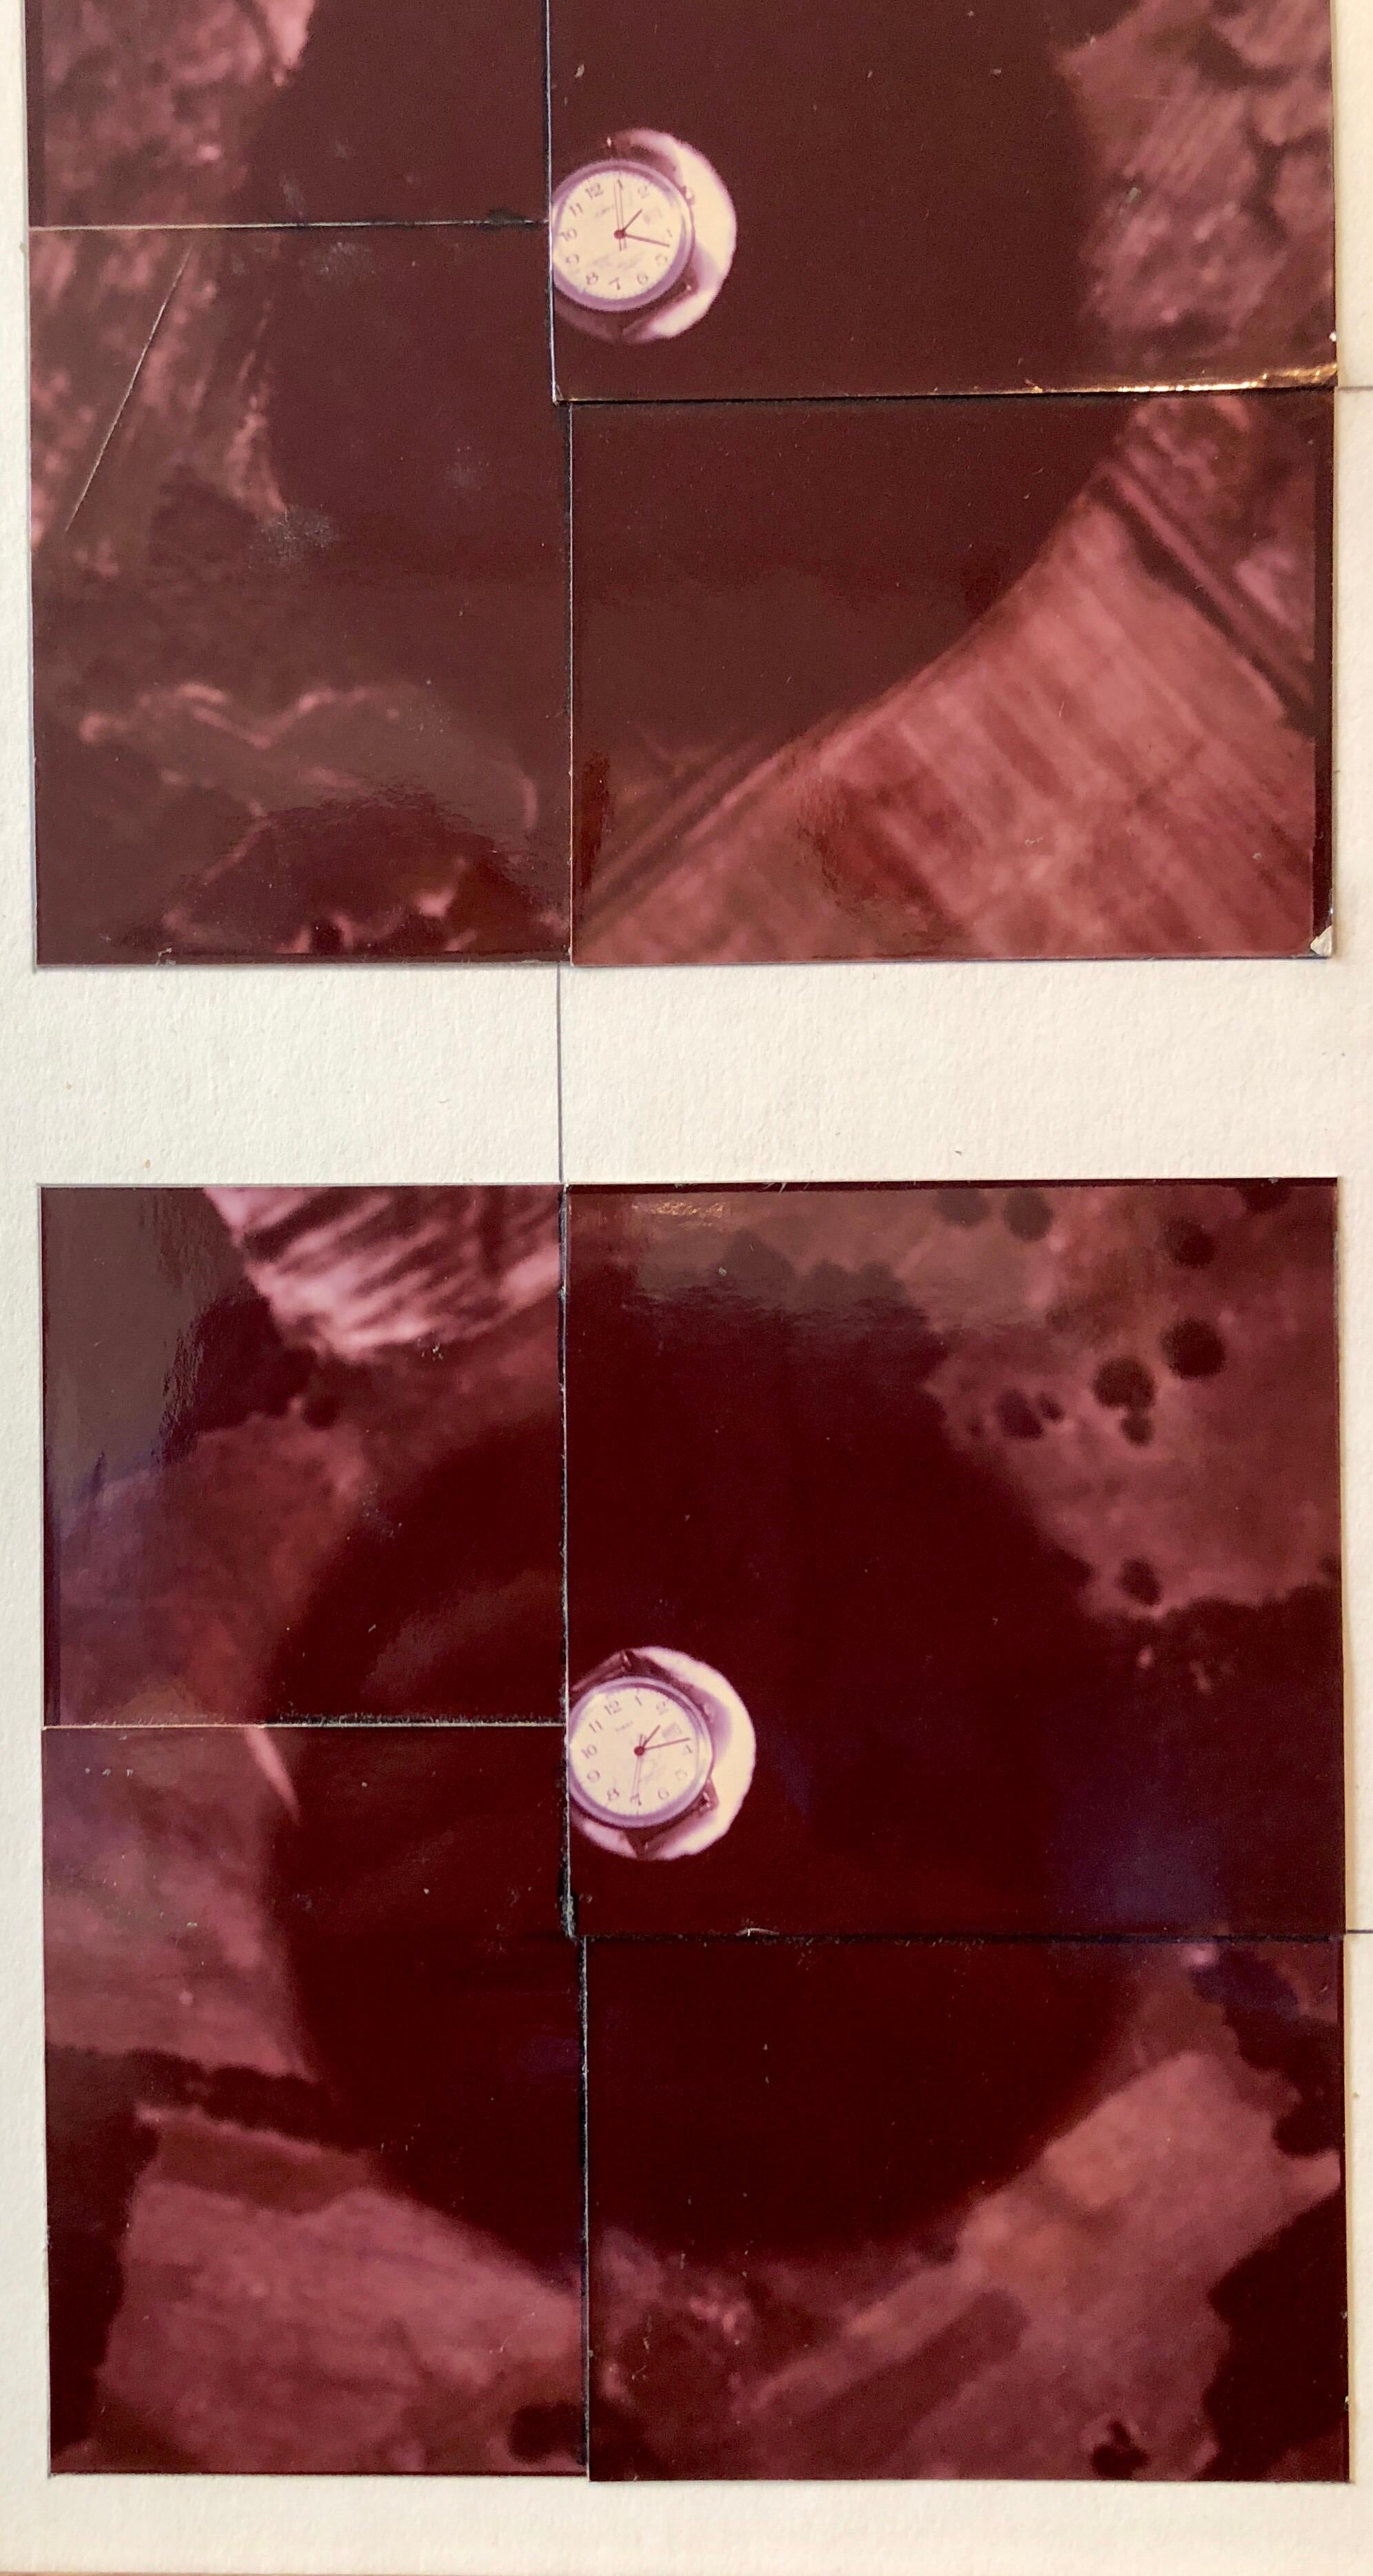  Fields-Muster, Armbanduhr, Foto Mosaik-Collage Luftbildfotografie  (Bauhaus), Photograph, von Vera Simons